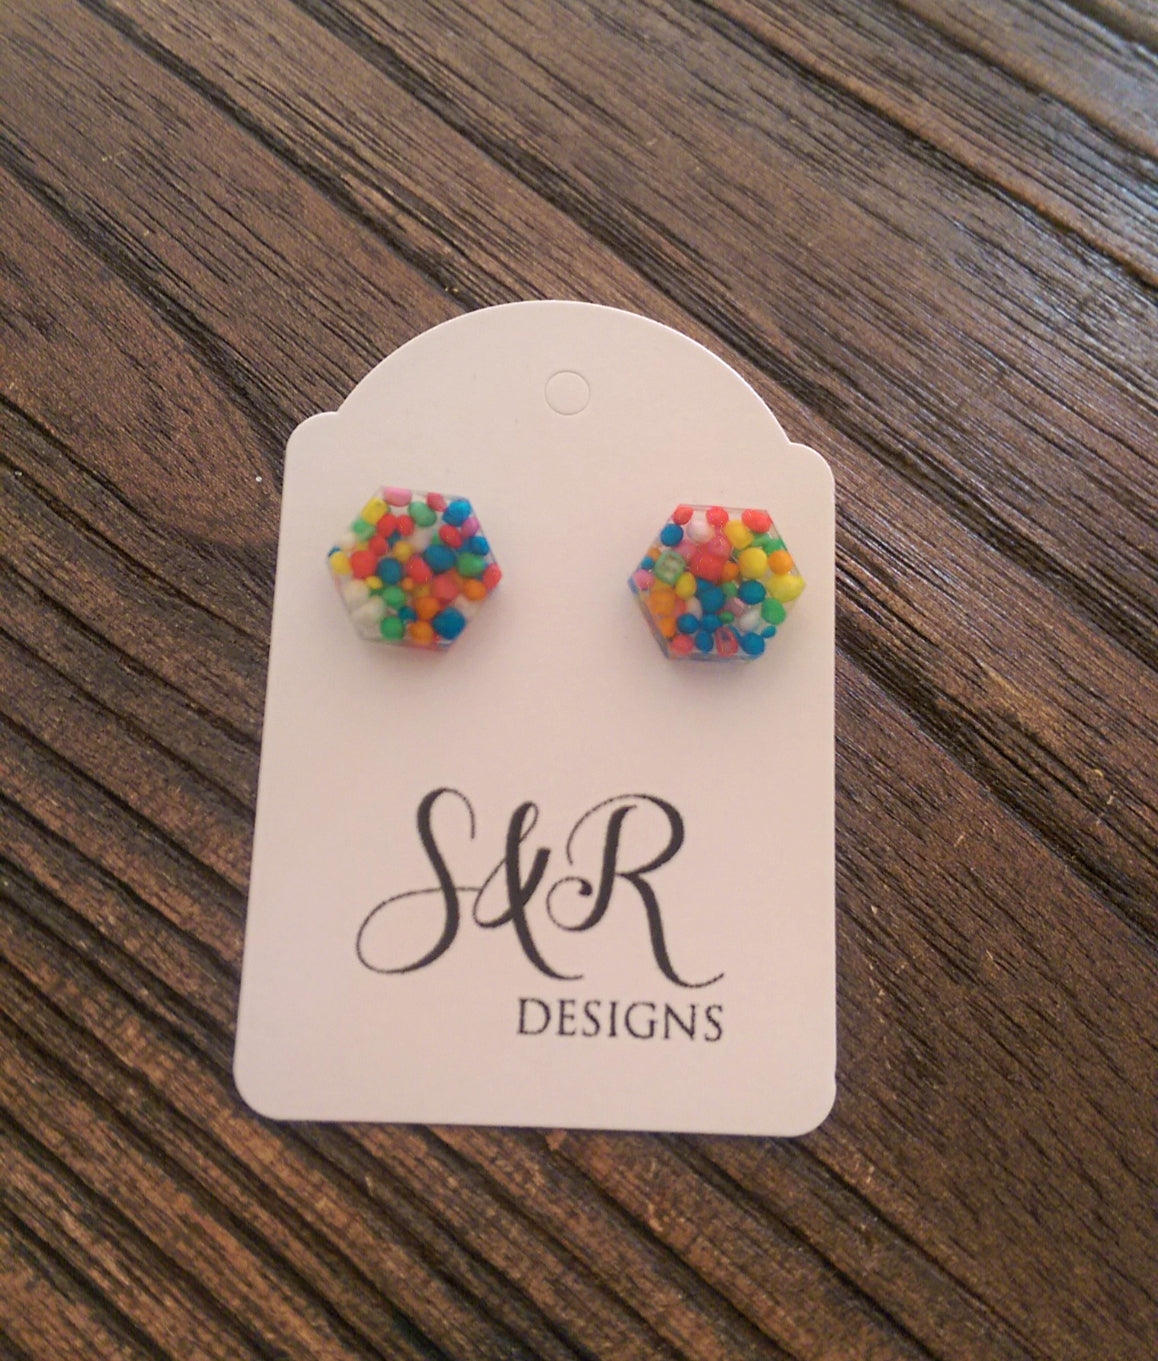 Hexagon Resin Stud Earrings, 100s and 1000s Resin Earrings. Stainless Steel Stud Earrings. 10mm - Silver and Resin Designs